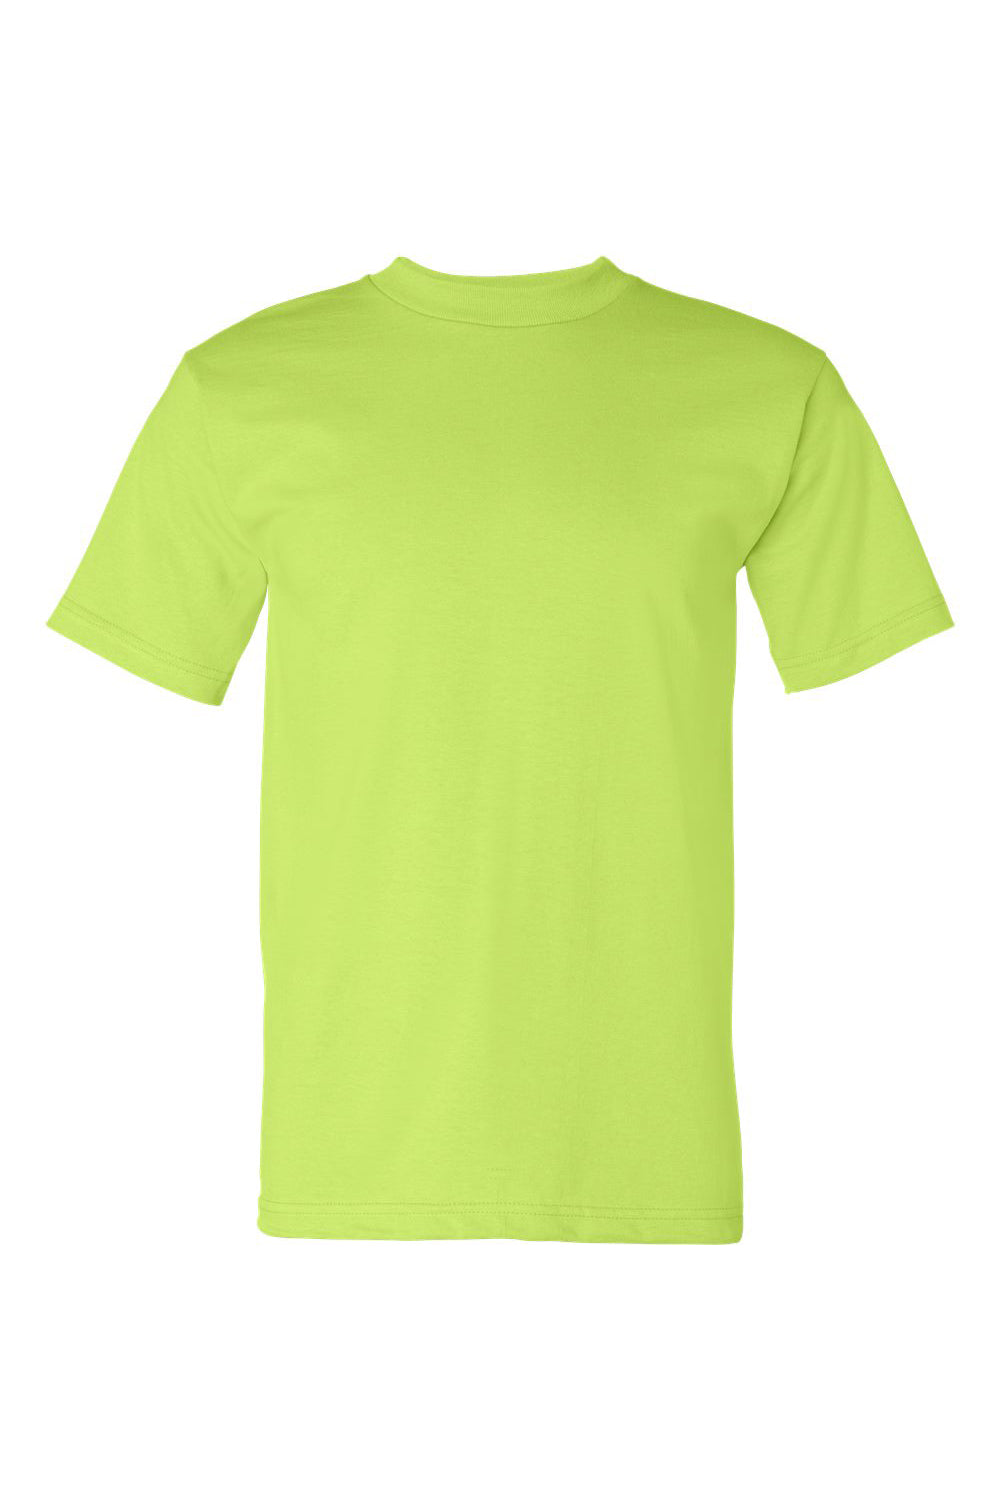 Bayside BA5100 Mens USA Made Short Sleeve Crewneck T-Shirt Lime Green Flat Front